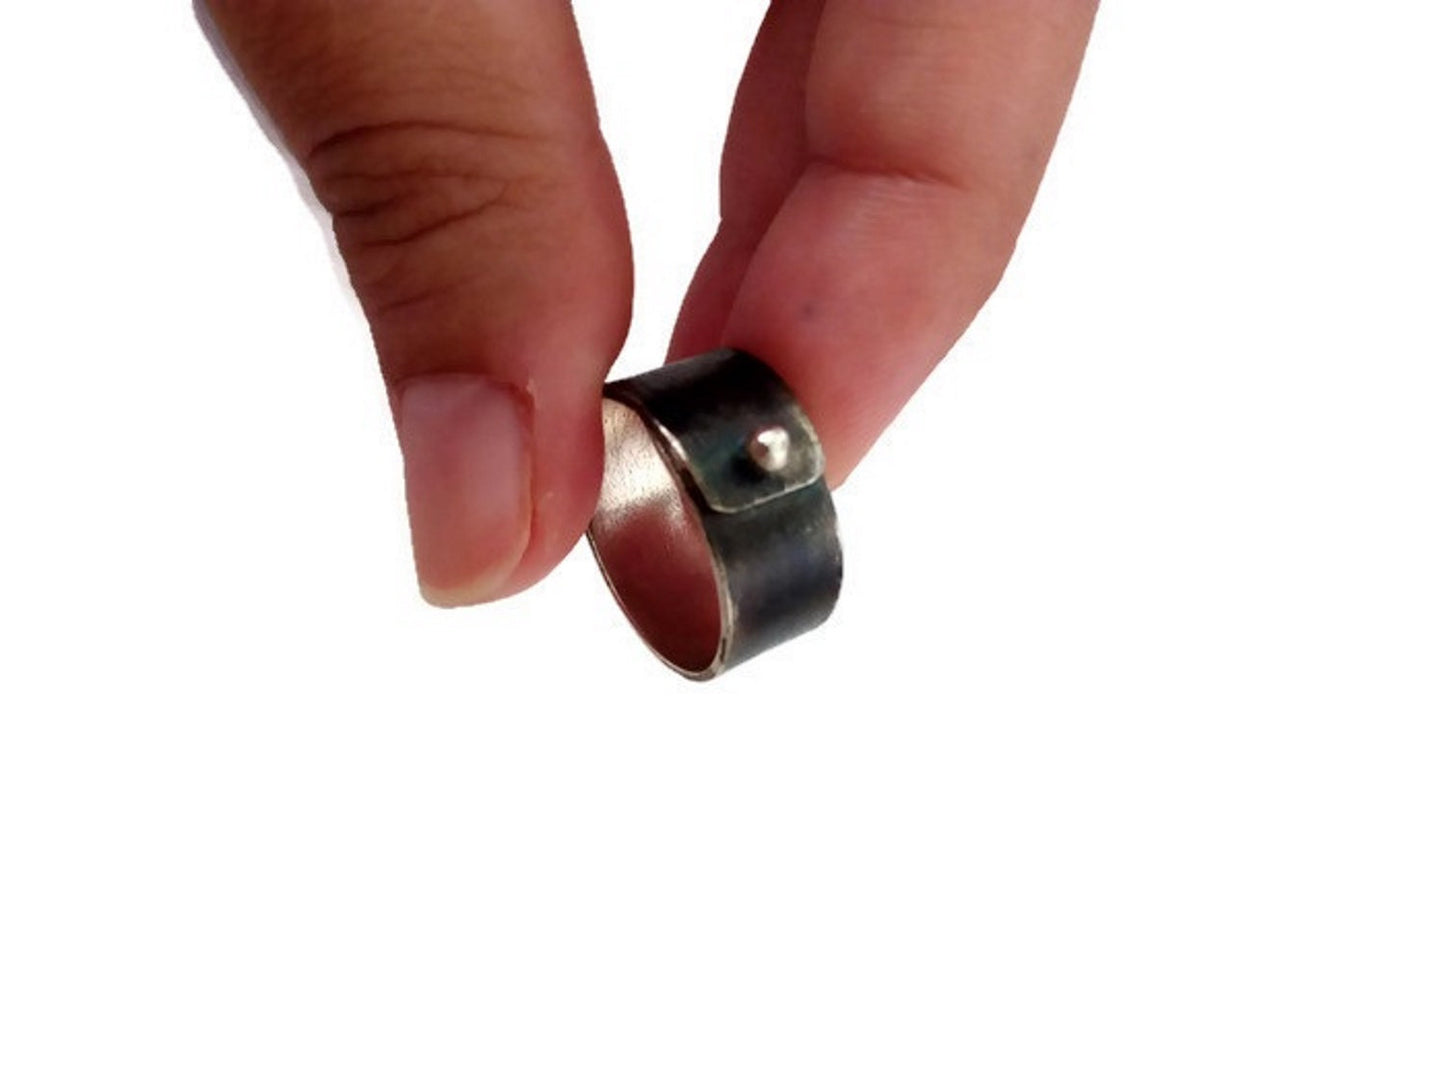 Oxidized Silver Band Ring Size 9, Unisex Black Ring